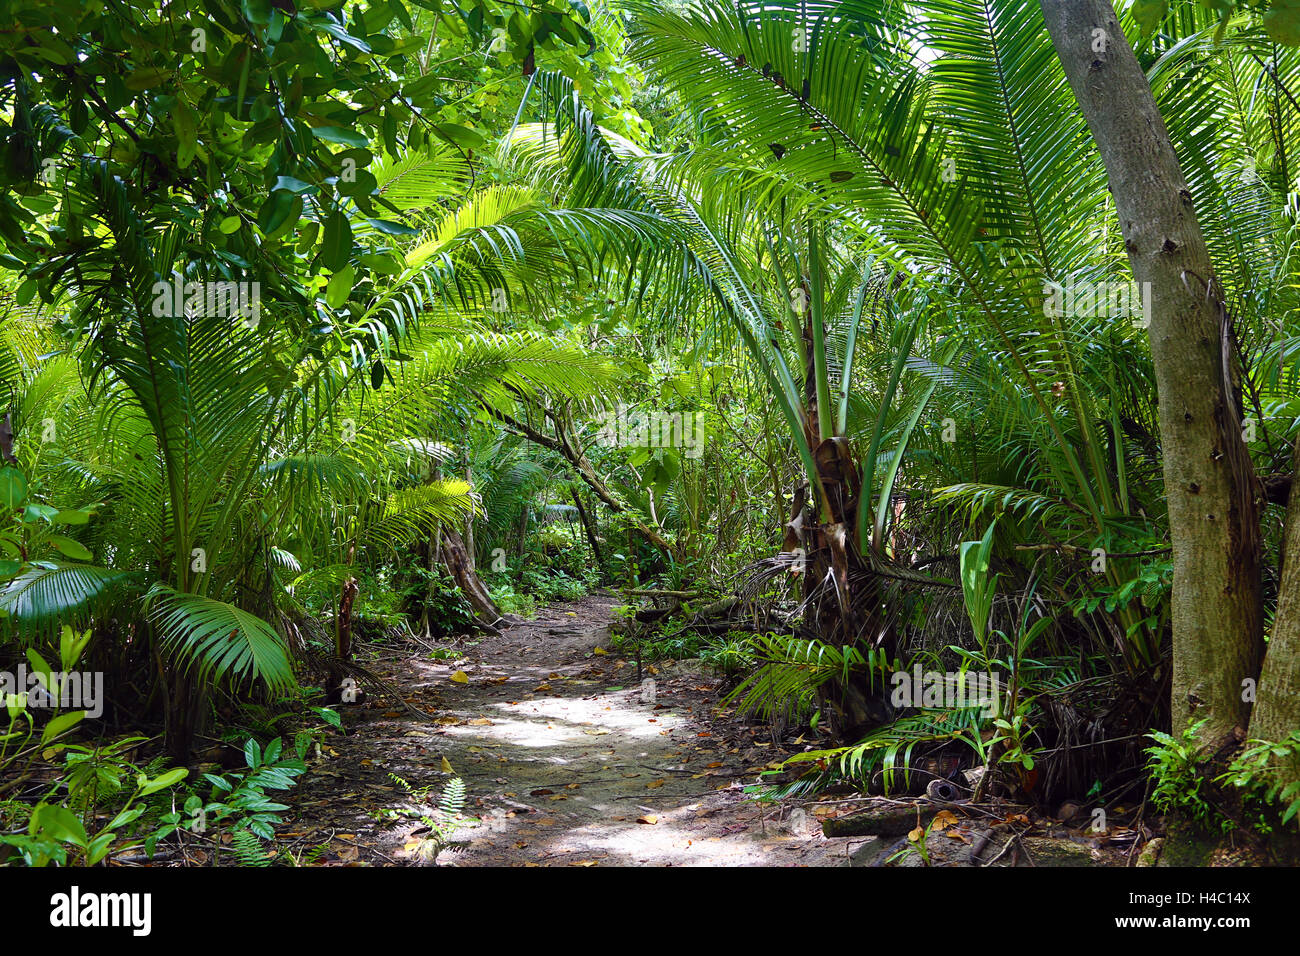 Forest path through tropical vegetation, Carp Island, Republic of Palau, Micronesia, Pacific Ocean Stock Photo